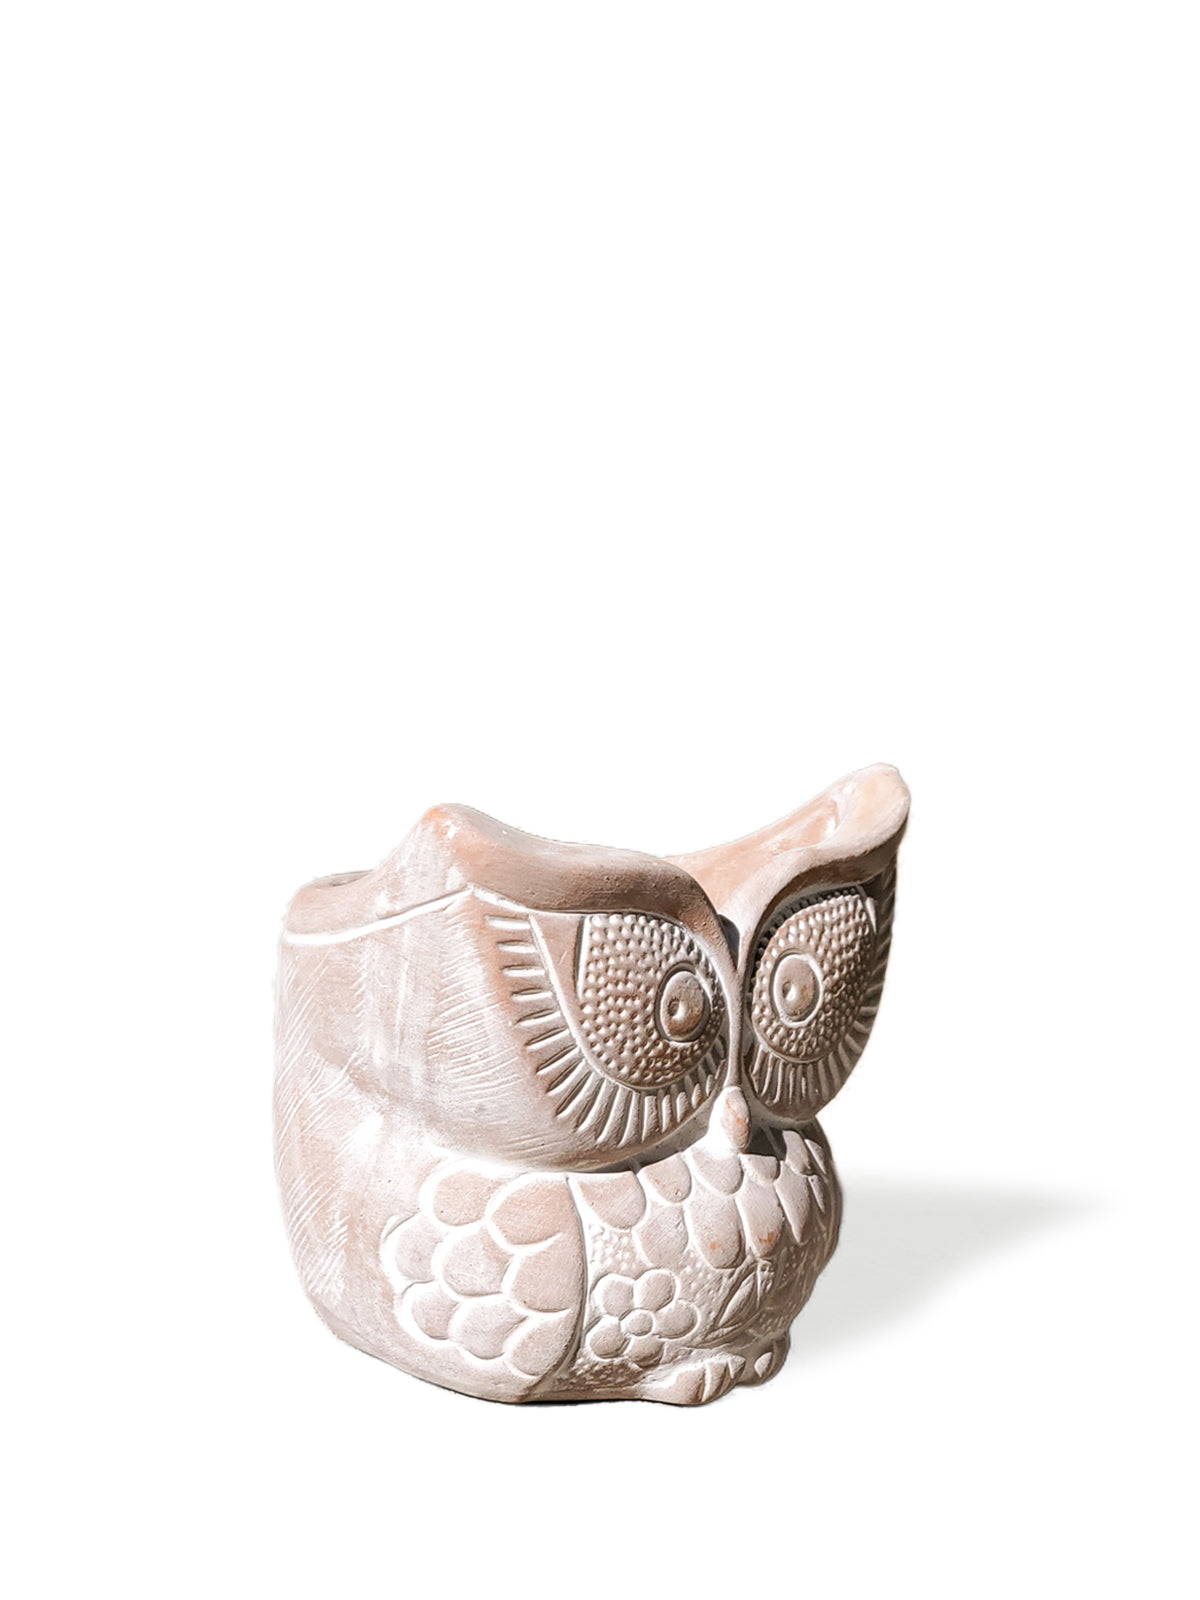 
                  
                    Terracotta Pot - Big Eye Owl by KORISSA
                  
                